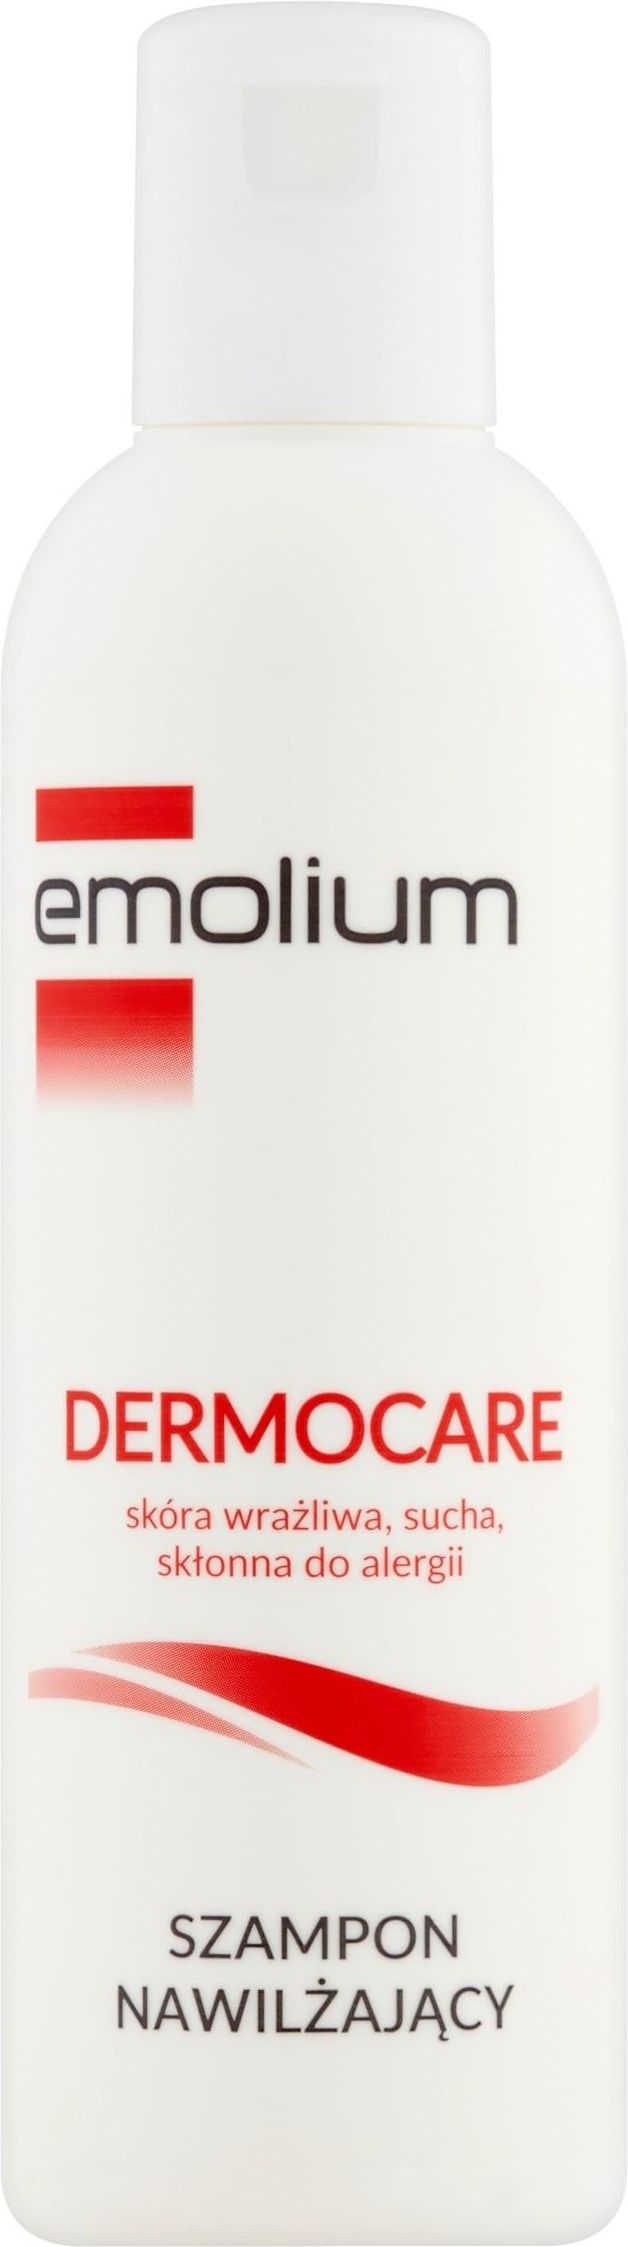 emolium szampon ceneo